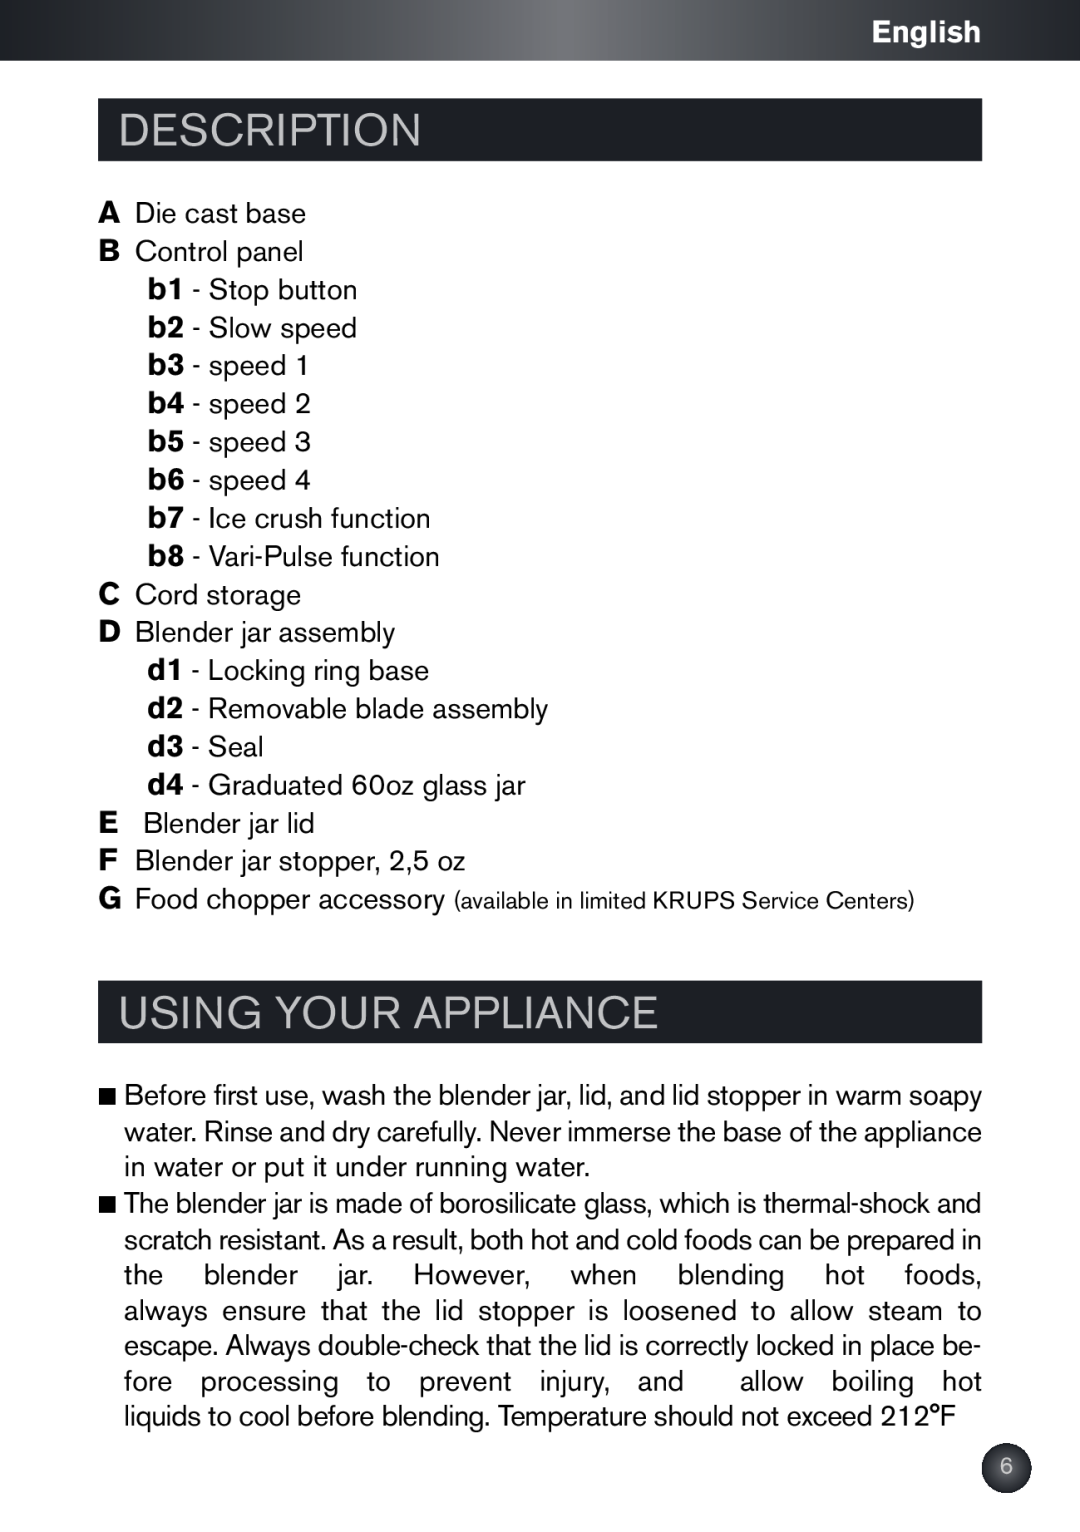 Krups KB790 manual Description, Using Your Appliance, English 